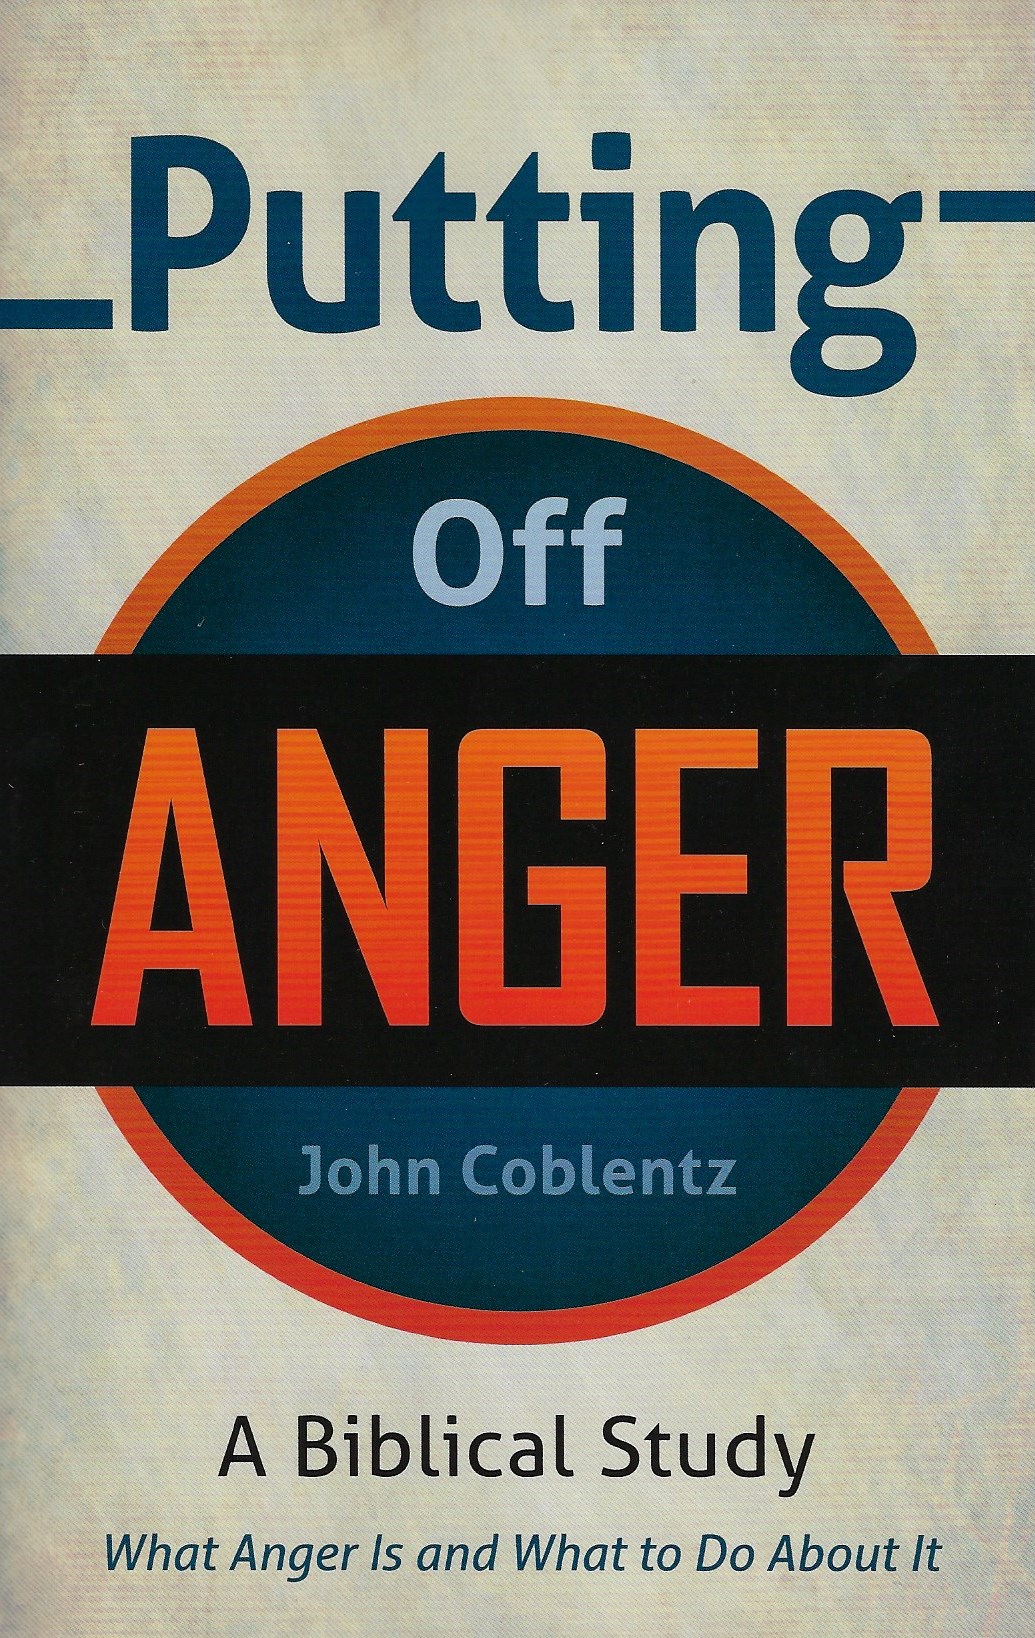 PUTTING OFF ANGER John Coblentz